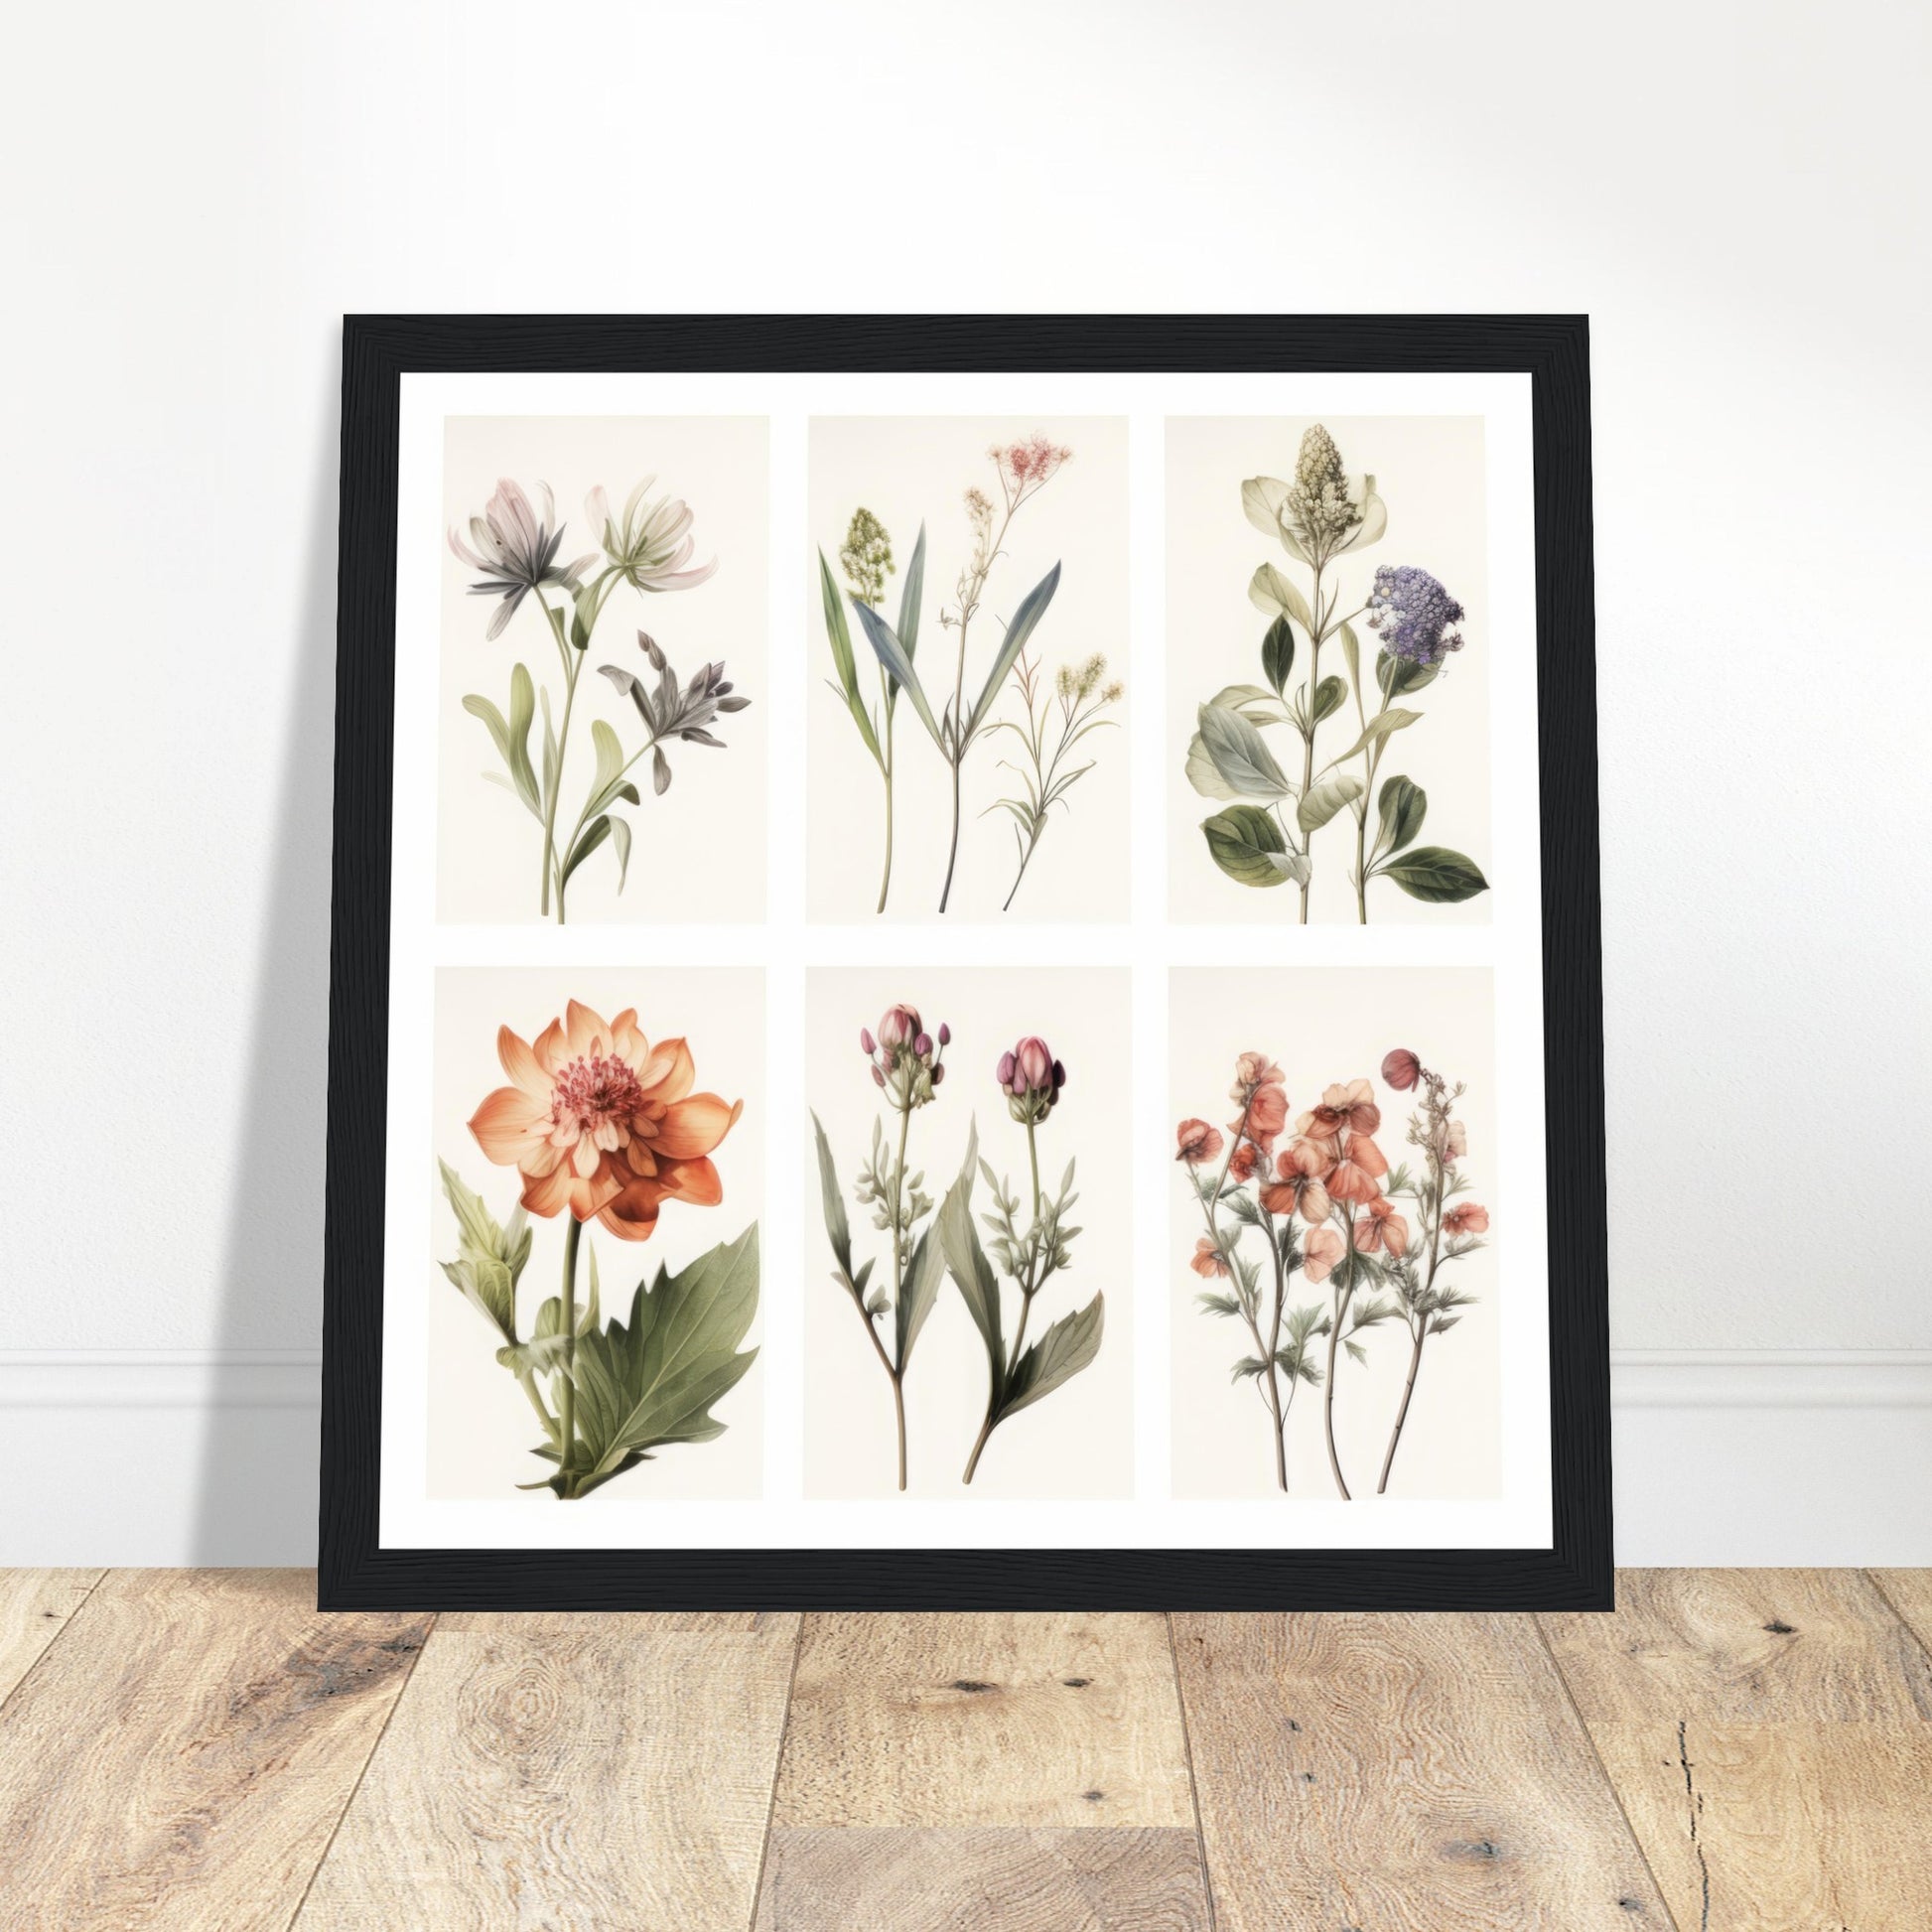 Elegance - Botanical Artwork #3- Print Room Ltd Dark wood frame 70x70 cm / 28x28"